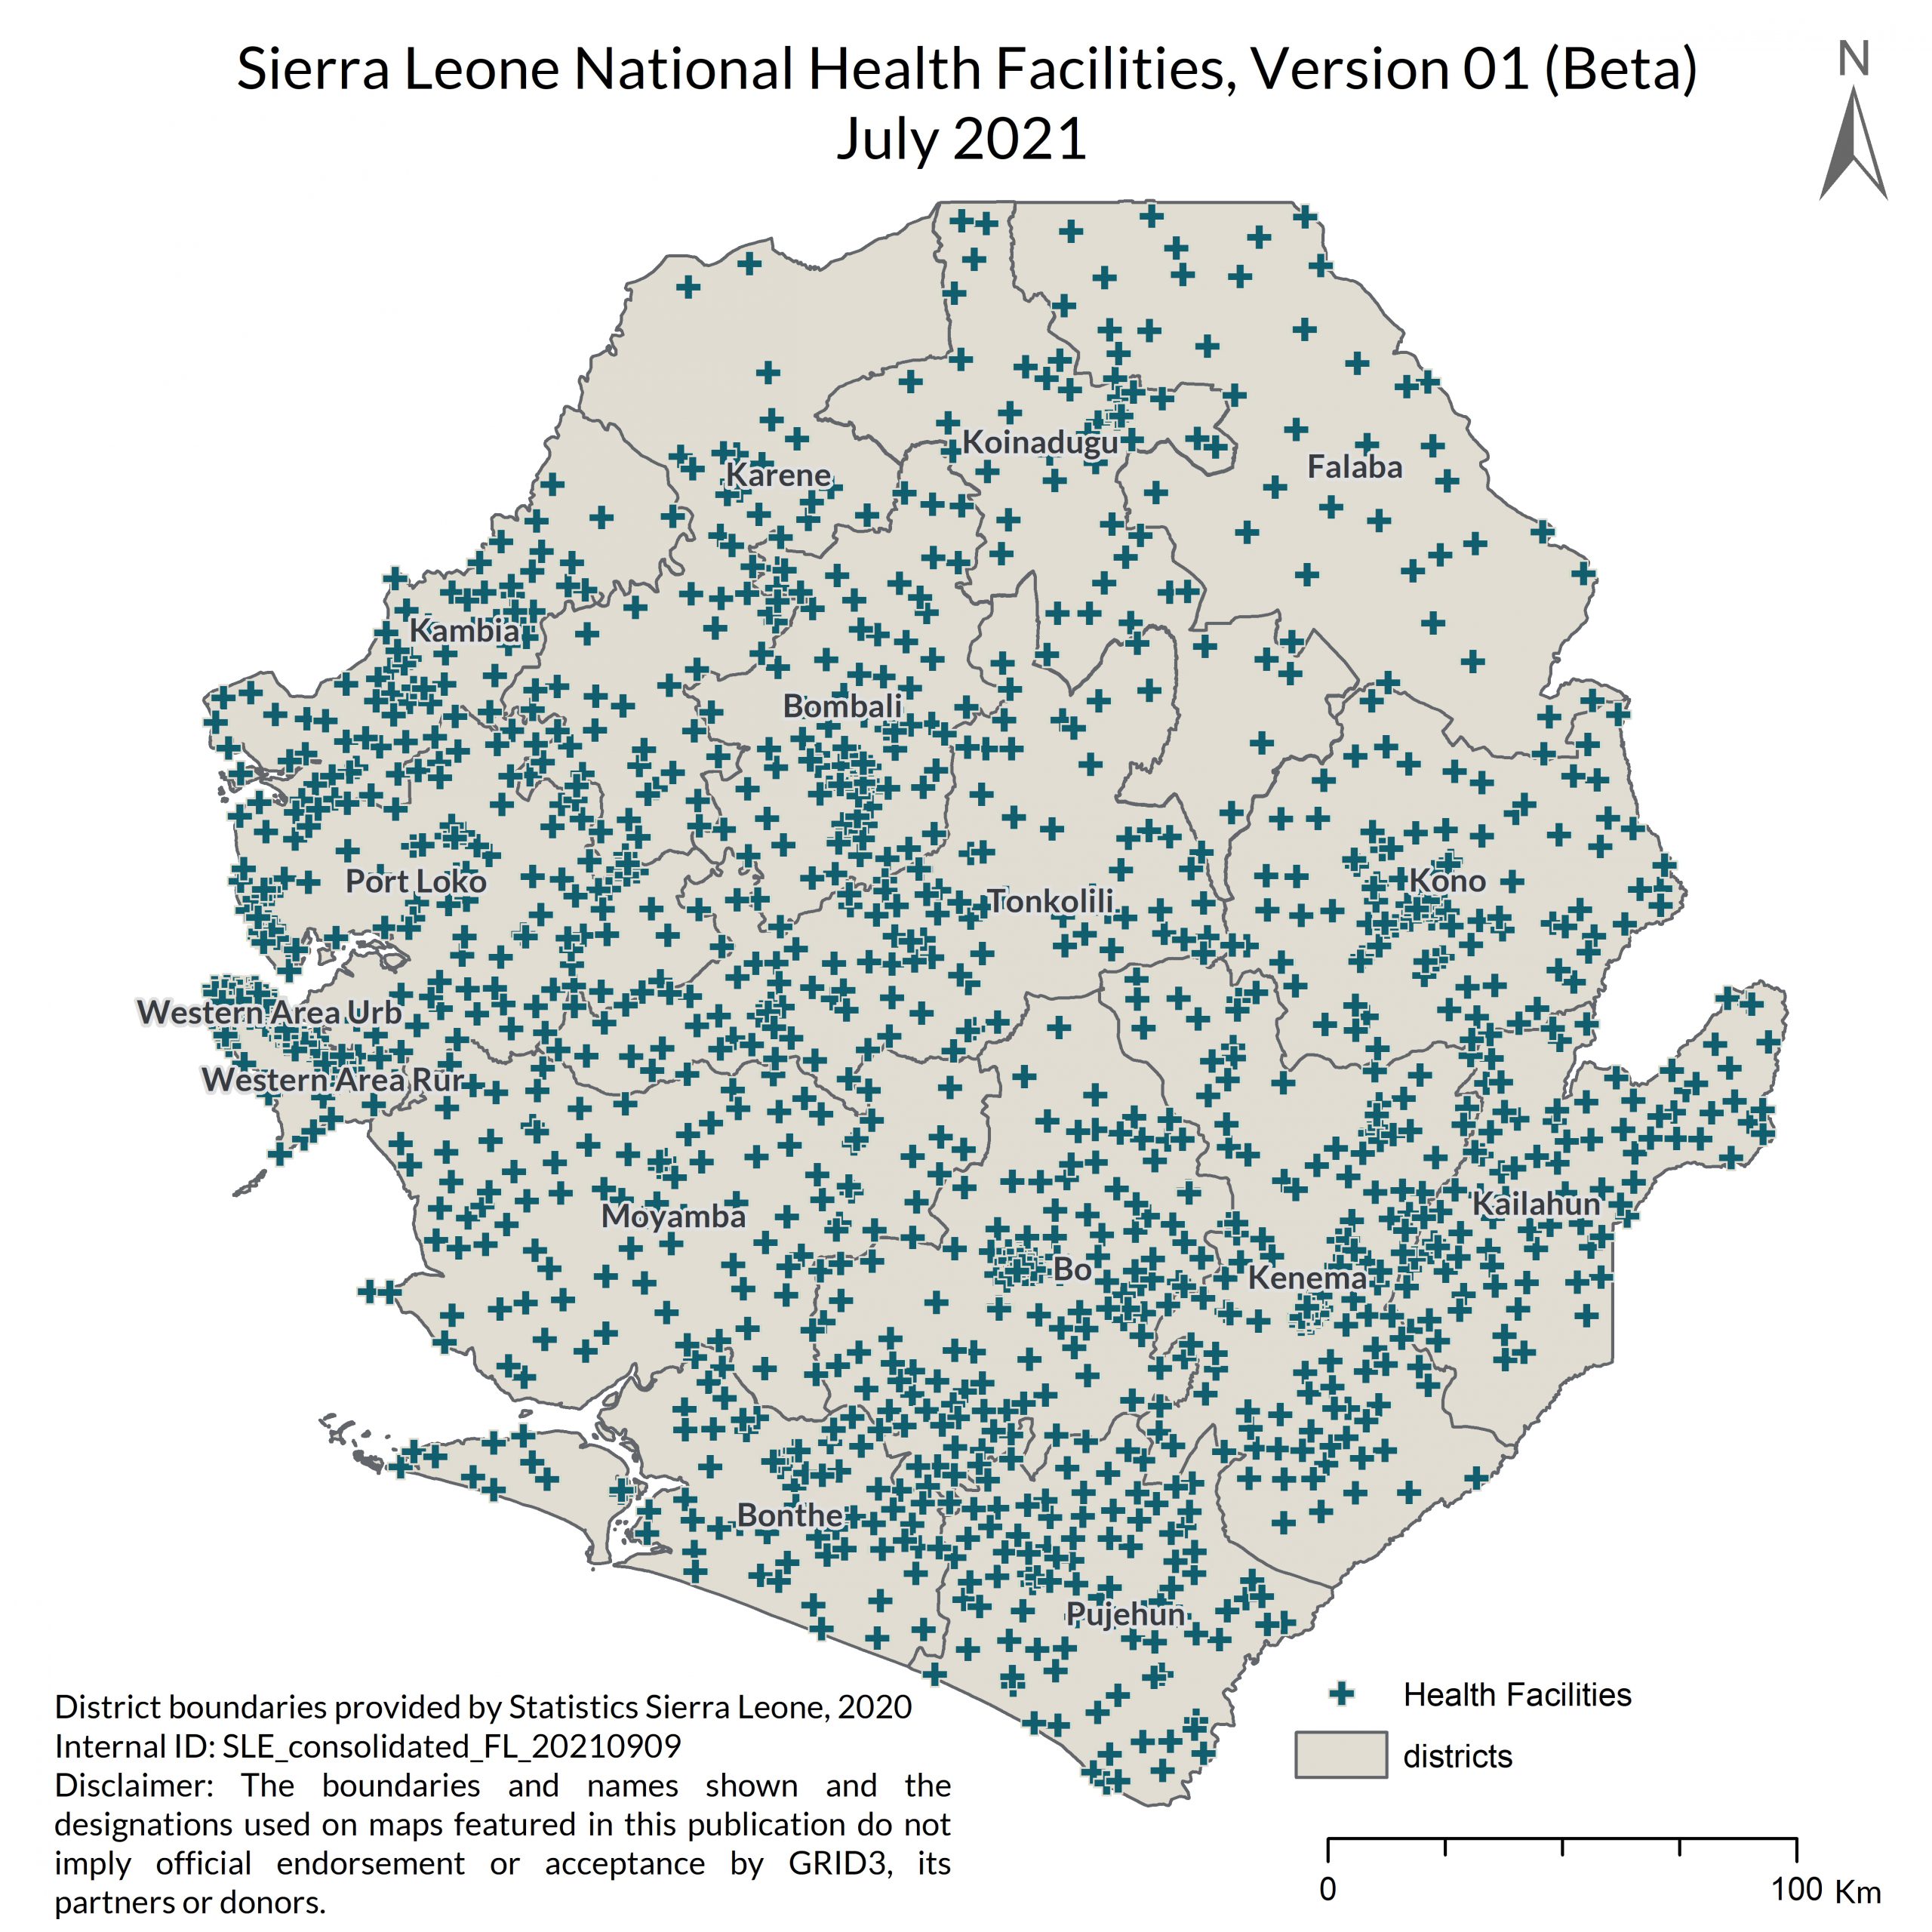 Spatial view of health facilities in Sierra Leone